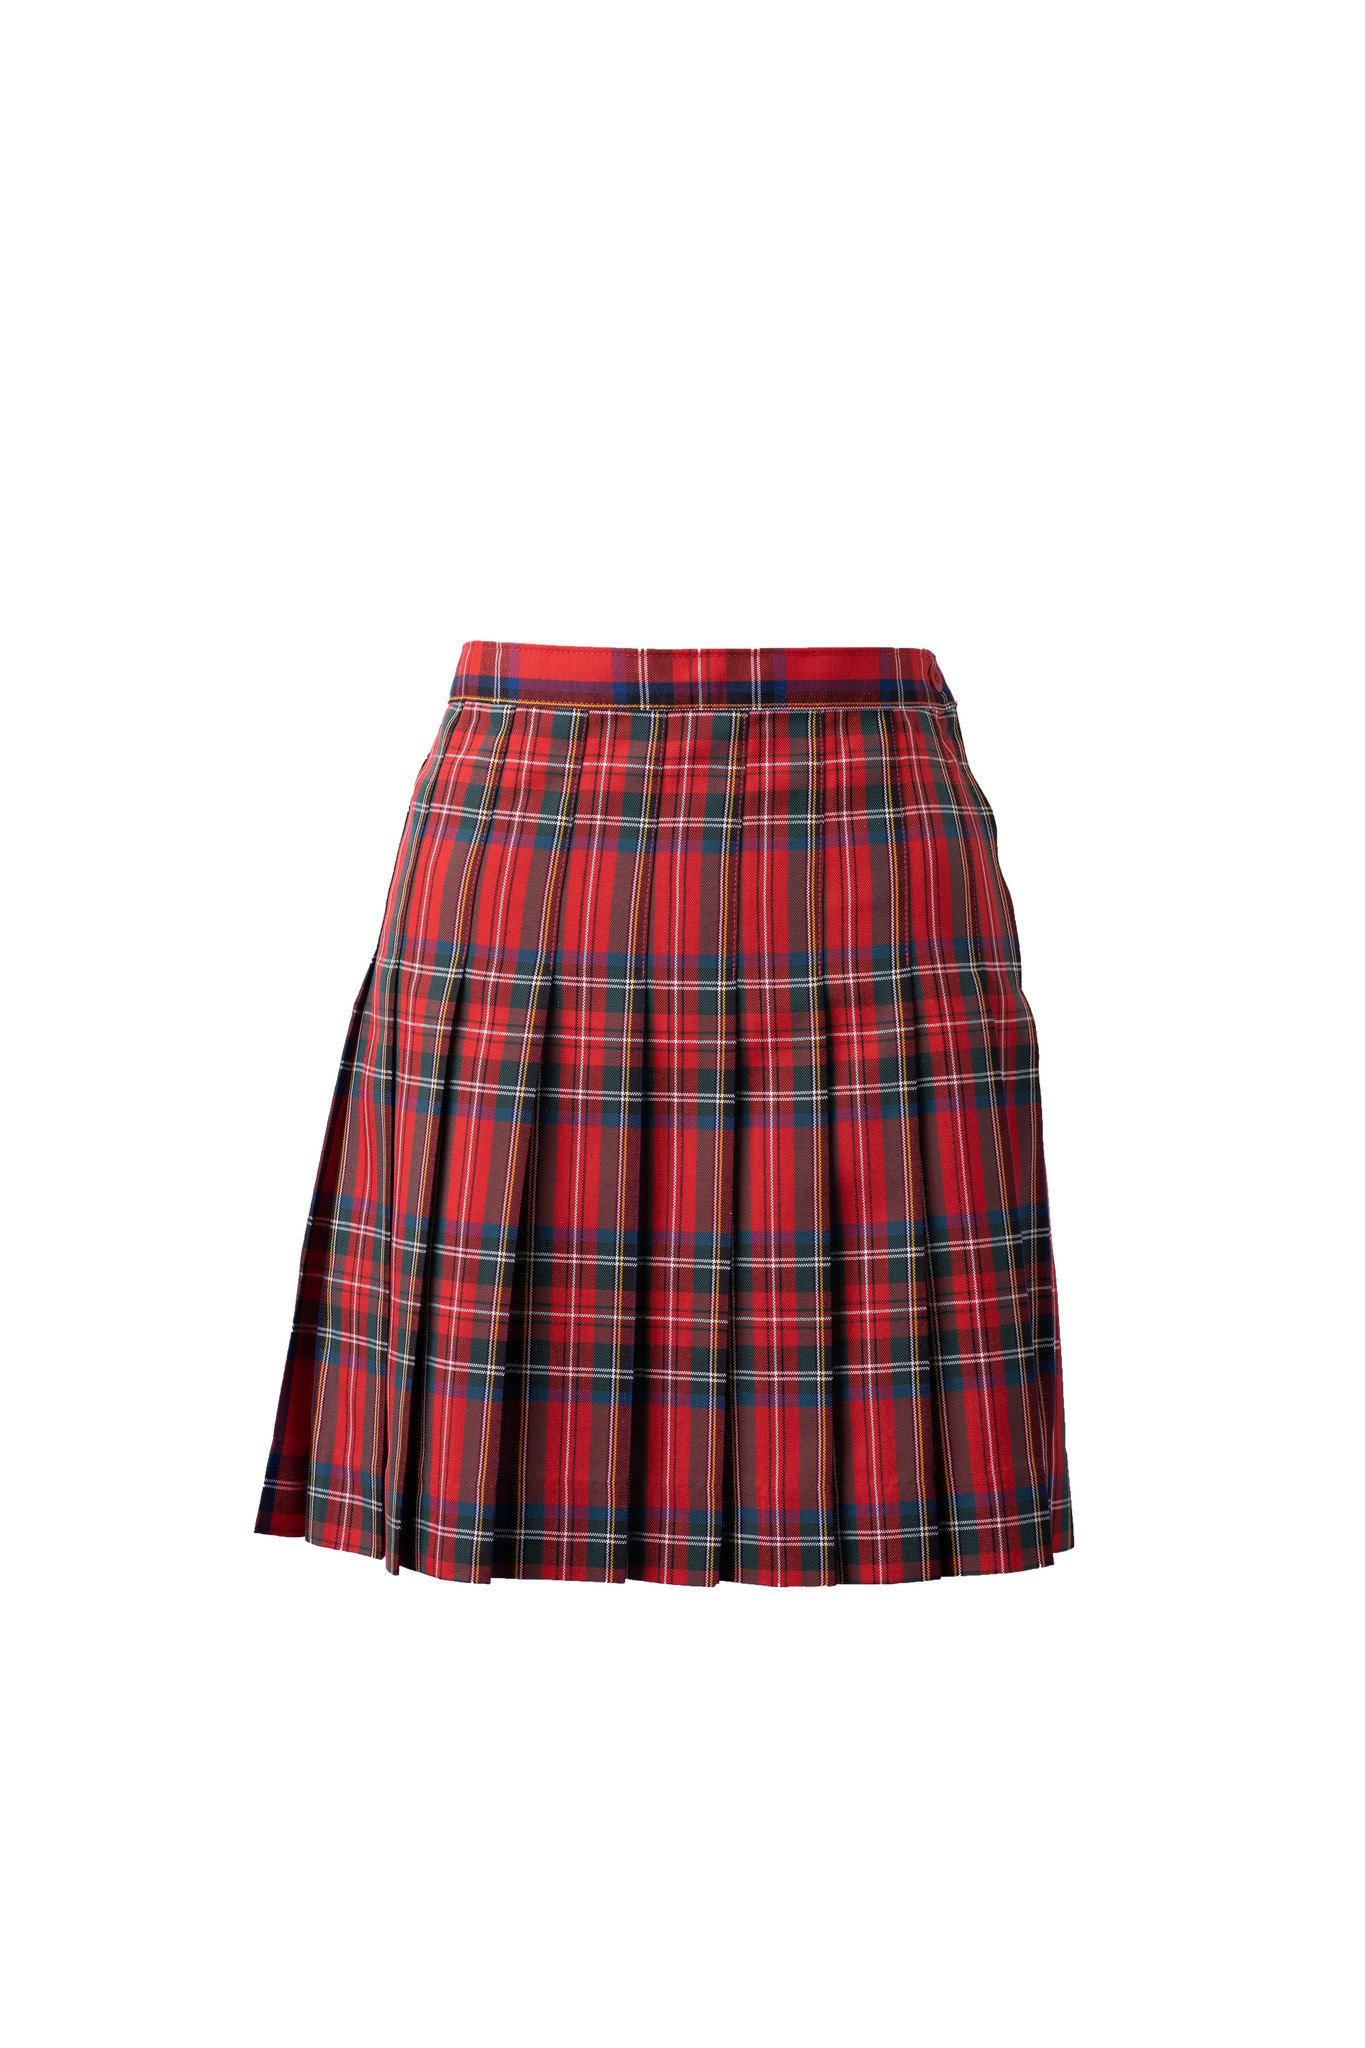 FSHA Flintridge Sacred Heart Red Plaid Skirt (Dress Uniform Option)